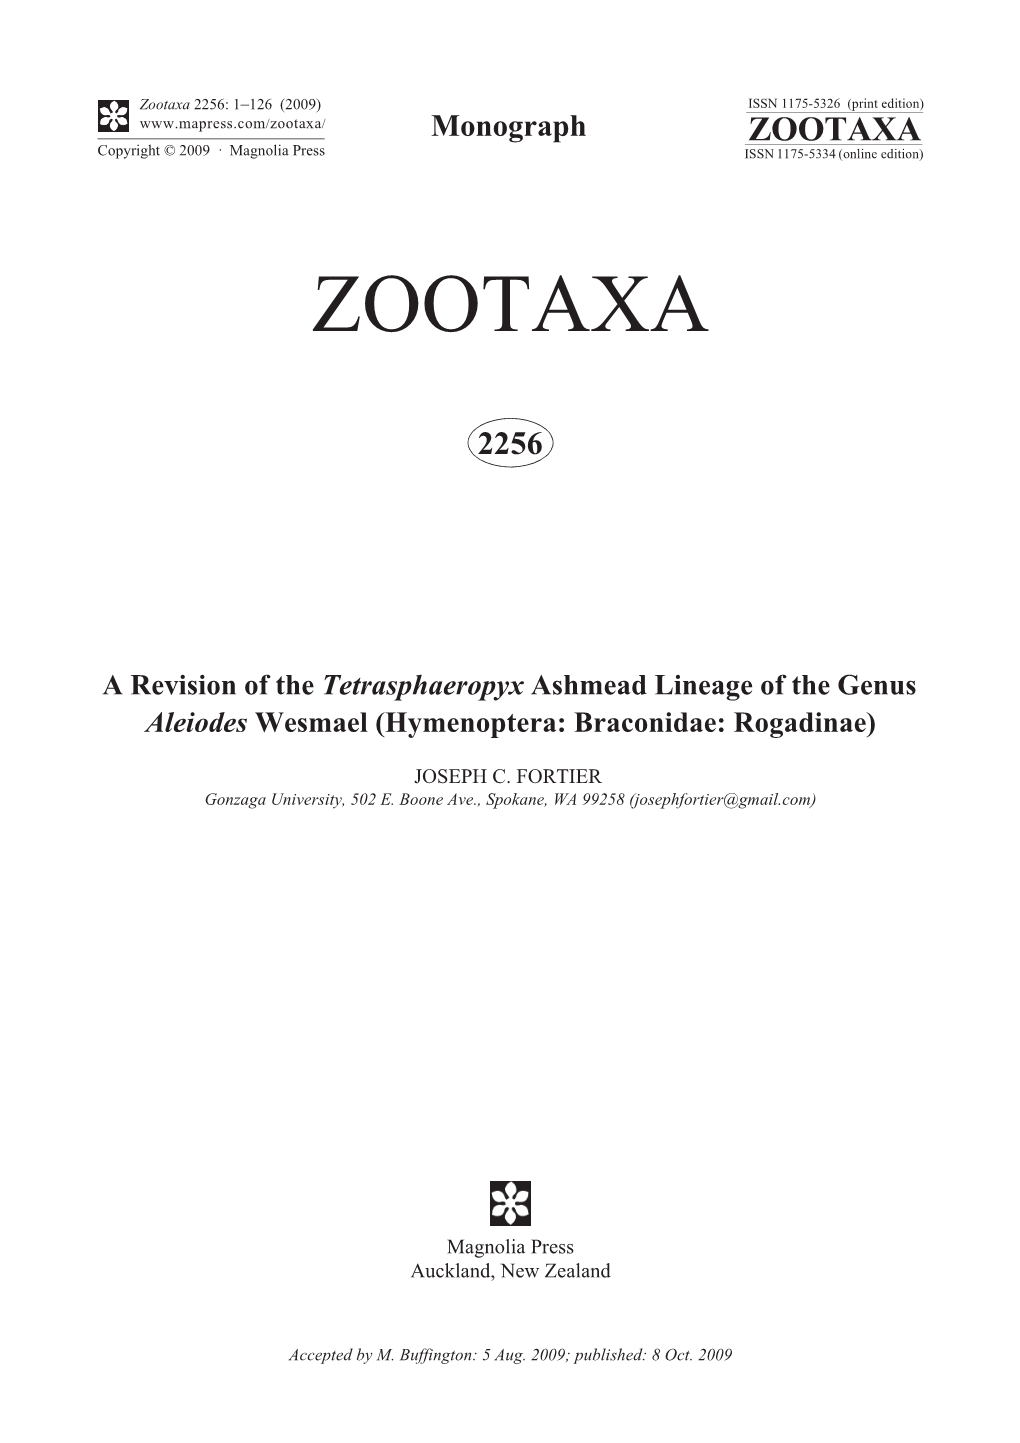 Zootaxa, a Revision of the Tetrasphaeropyx